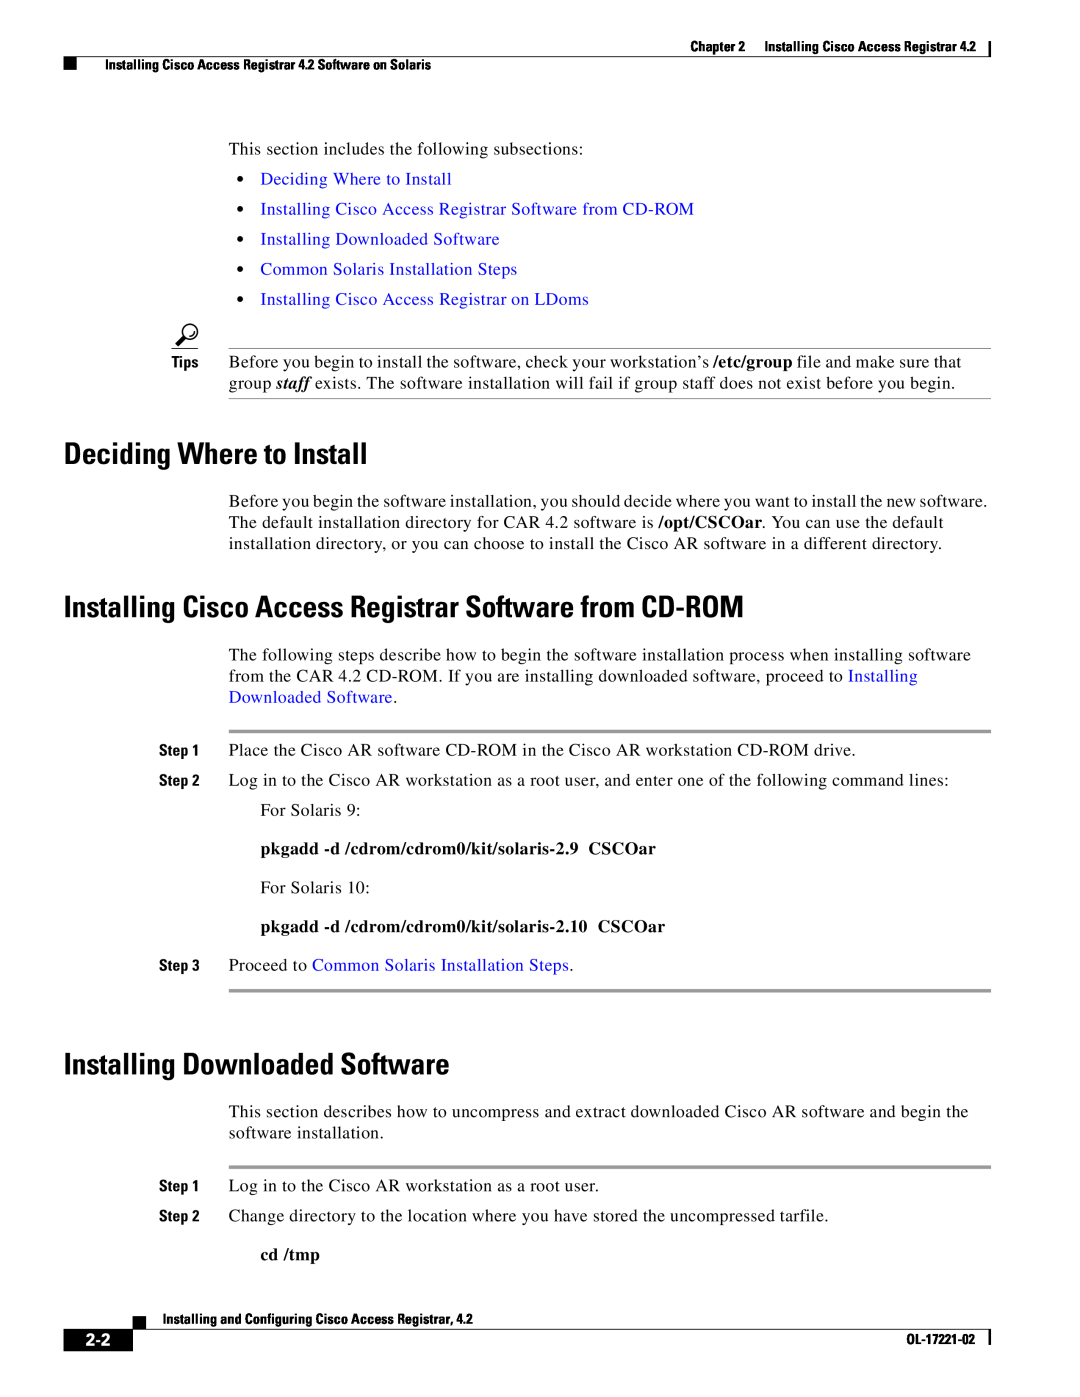 Cisco Systems 4.2 manual Deciding Where to Install, Installing Cisco Access Registrar Software from CD-ROM, cd /tmp 